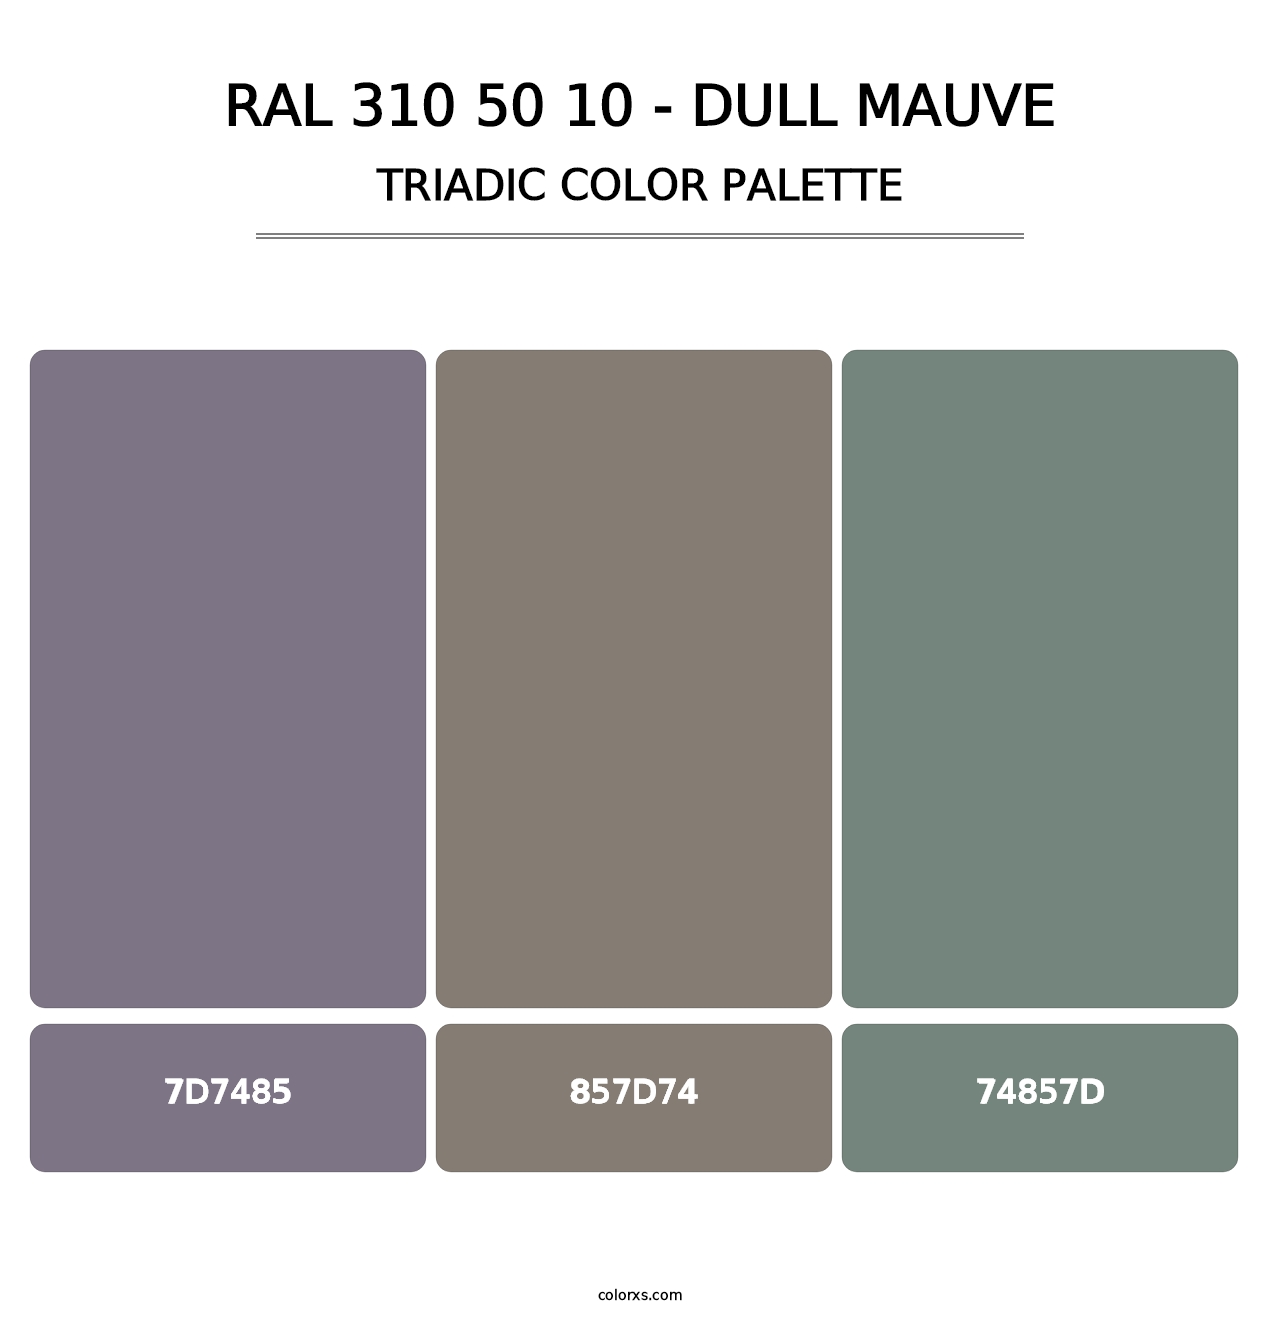 RAL 310 50 10 - Dull Mauve - Triadic Color Palette